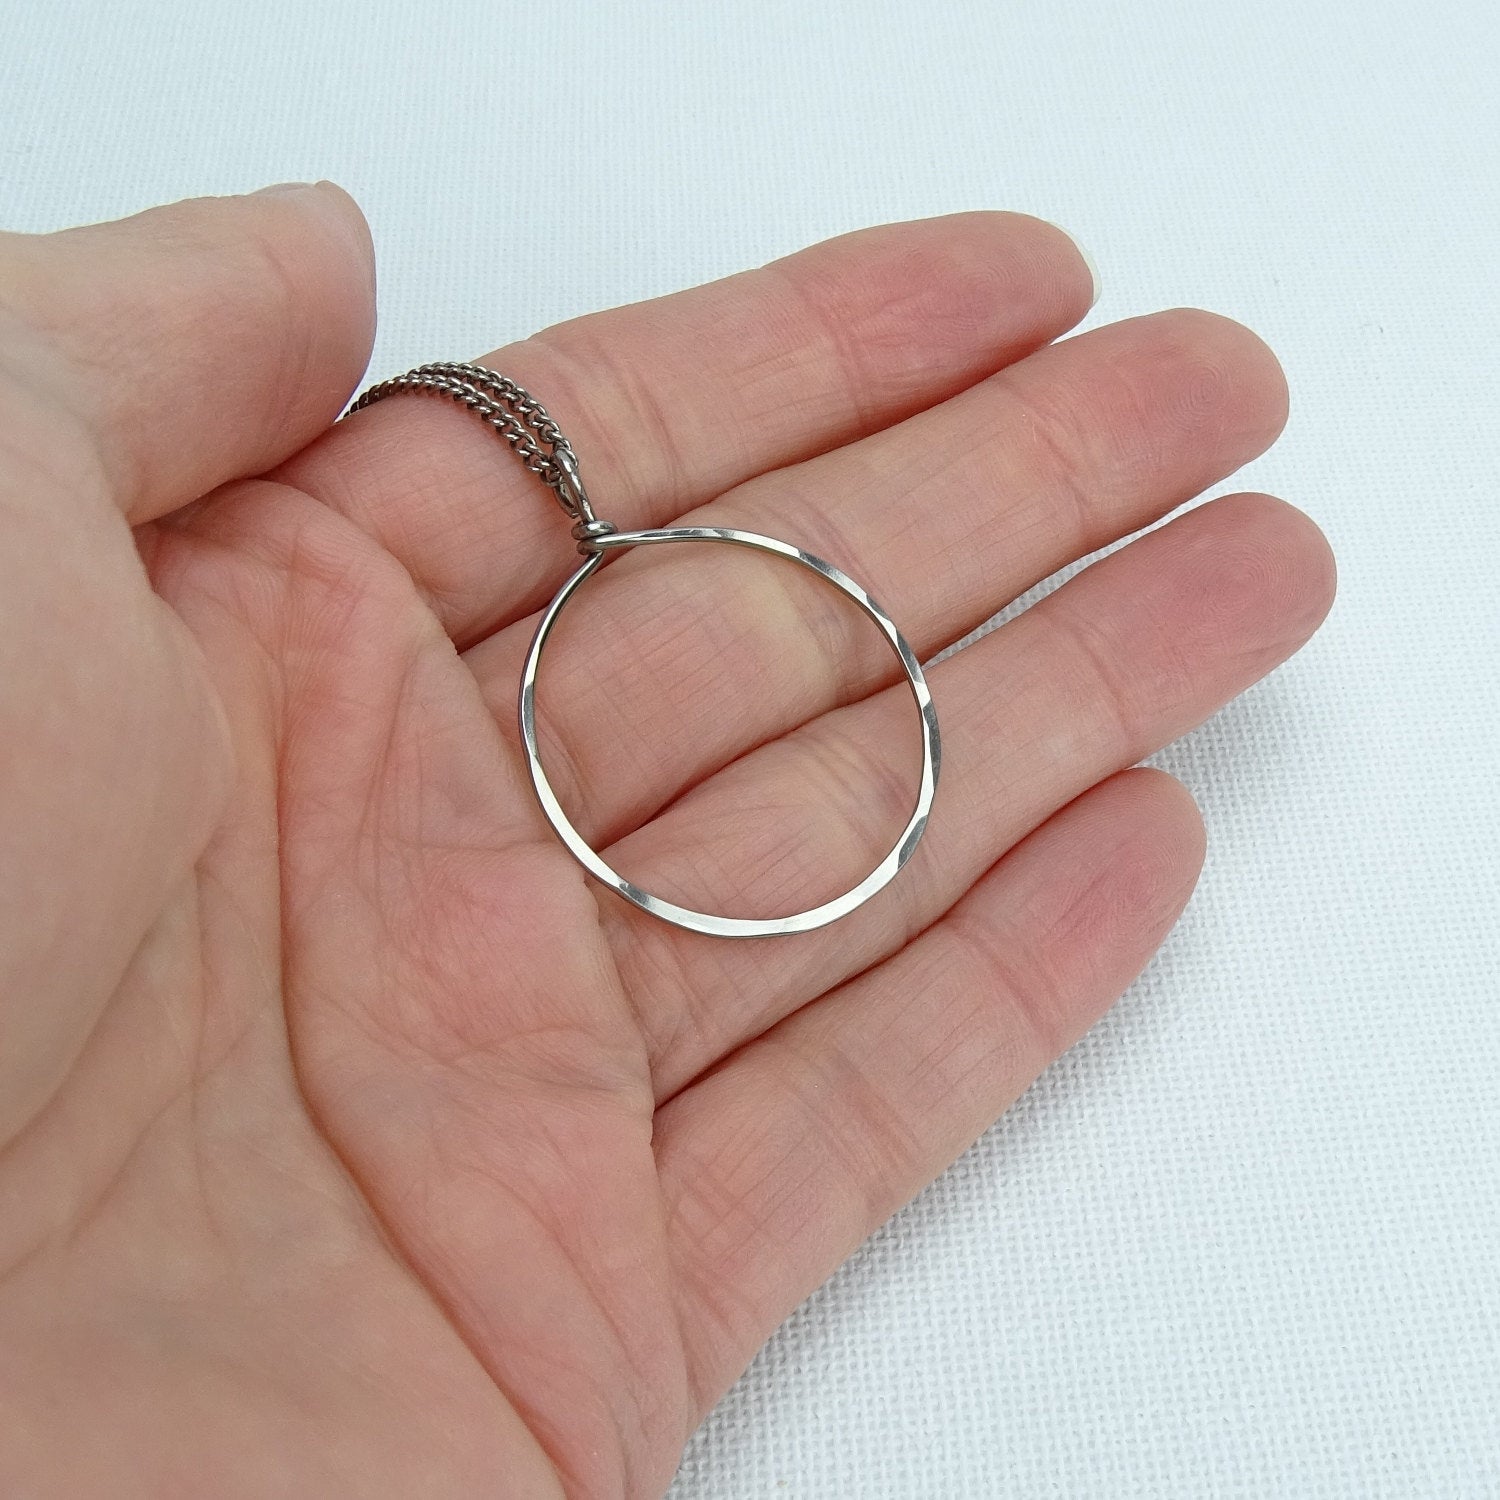 Circle Hoop Pendant Titanium Necklace, Hypoallergenic Nickel Free Niobium, Big Hammered Ring Necklace for Sensitive Skin, Simple Modern Loop